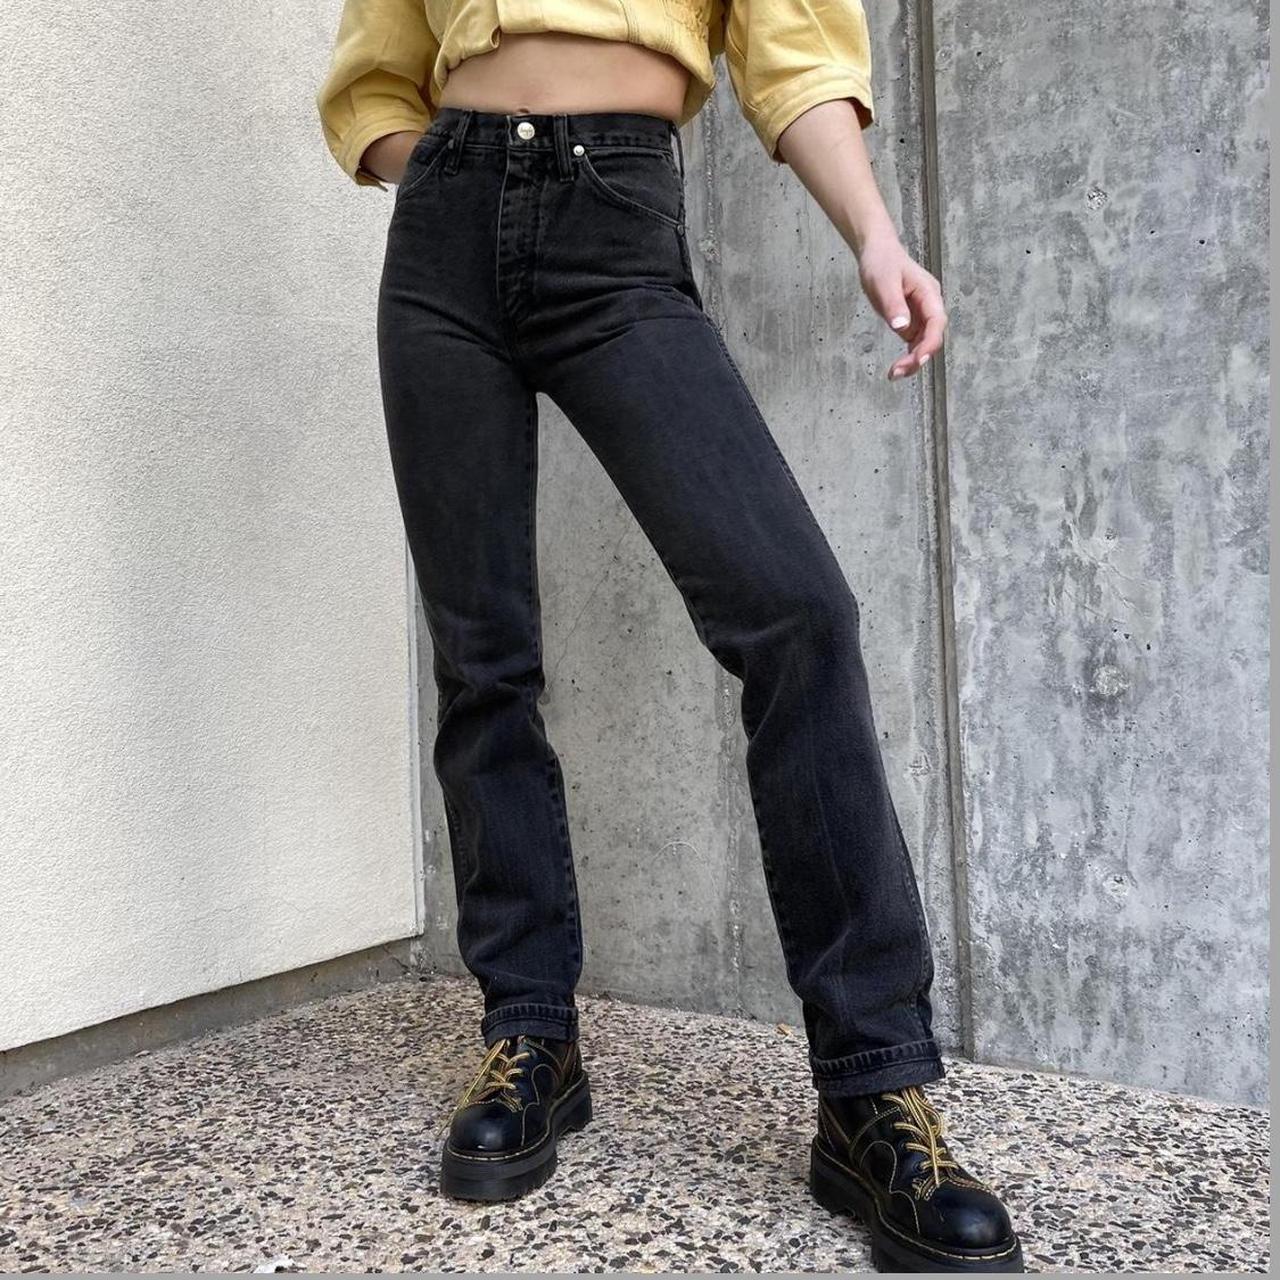 The Best Vintage Black Denim Jeans, Brand Wrangler